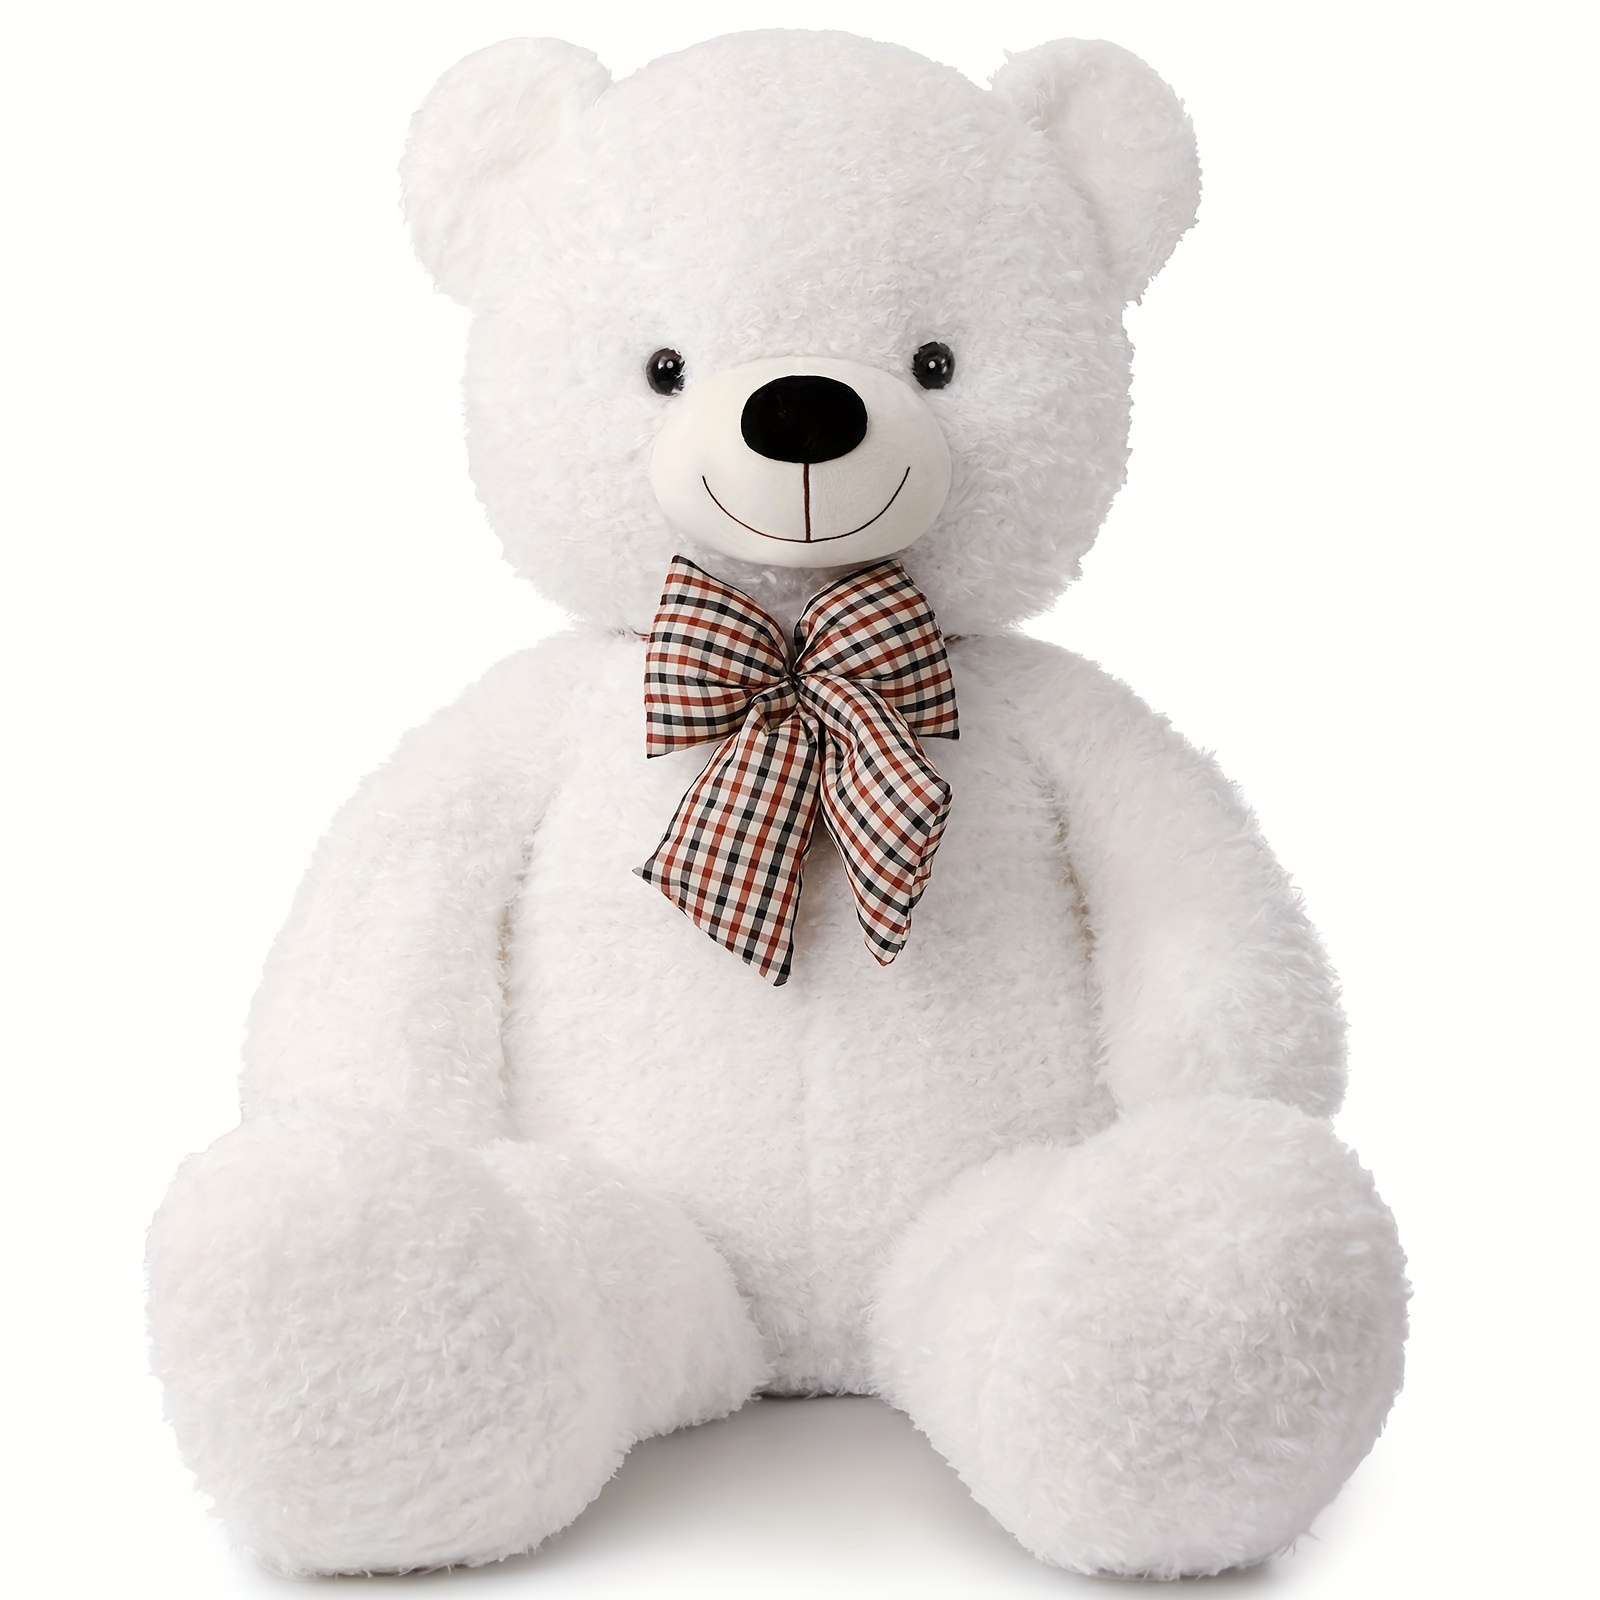 

Giant Teddy Bear Stuffed Animal, Big Teddy Bear For Baby Shower, Life Size Teddy Bear For Girlfriend Children, 47inch, White